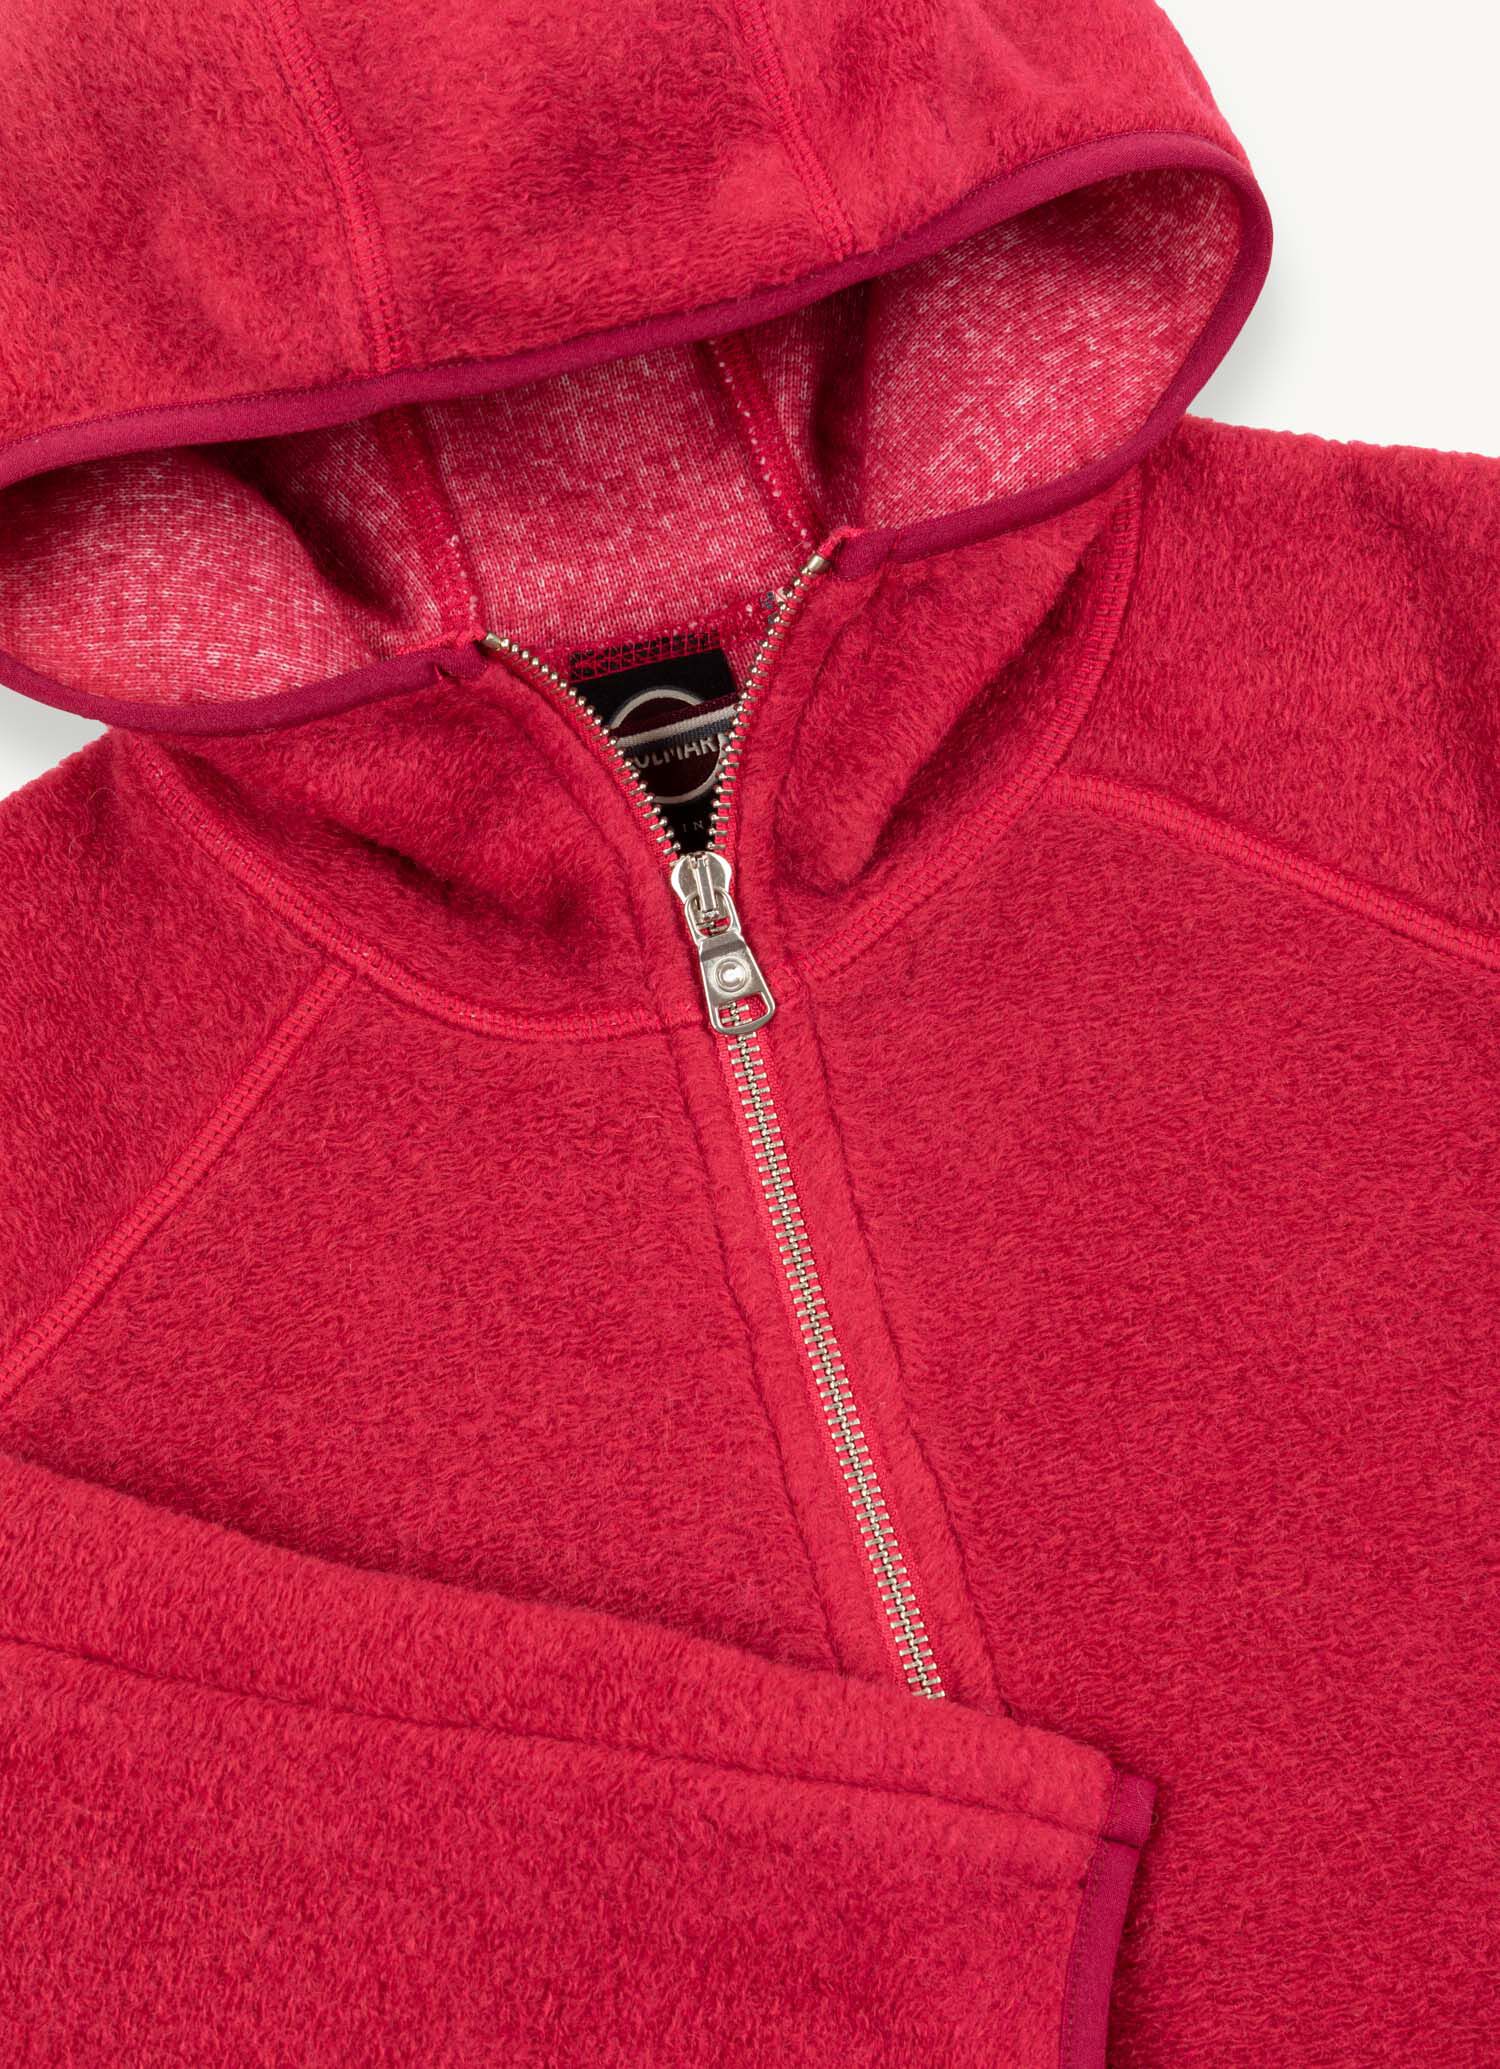 DAMEN Pullovers & Sweatshirts Ohne Kapuze Rot S Zara sweatshirt Rabatt 99 % 